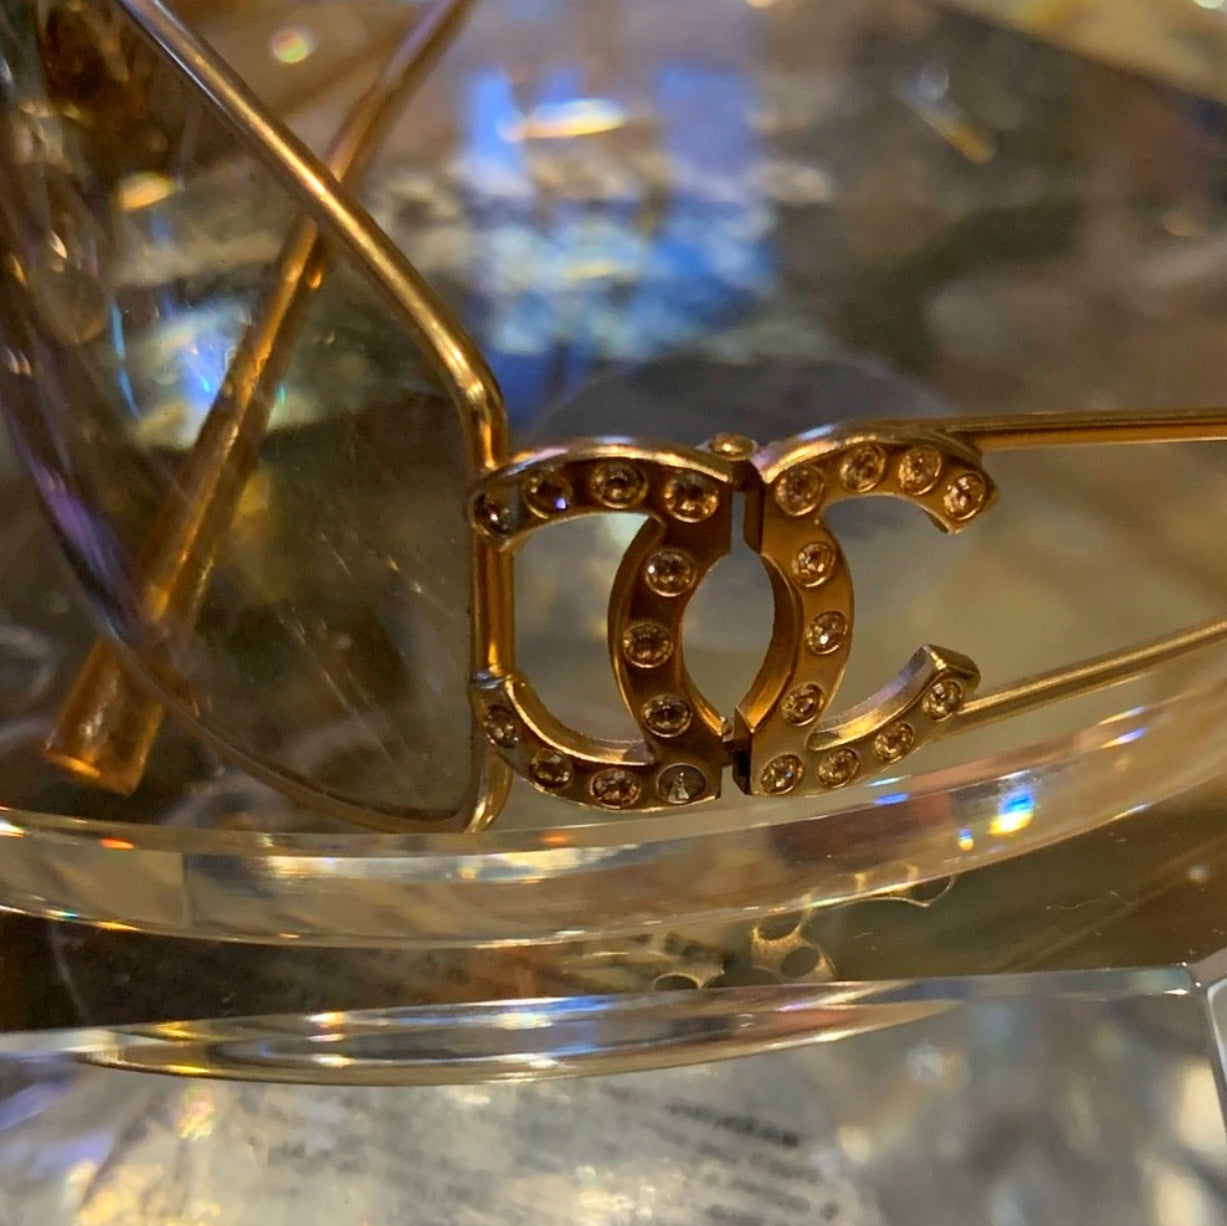 Chanel Logo Rhinestone Shield Sunglasses in Gold – Entourage Vintage